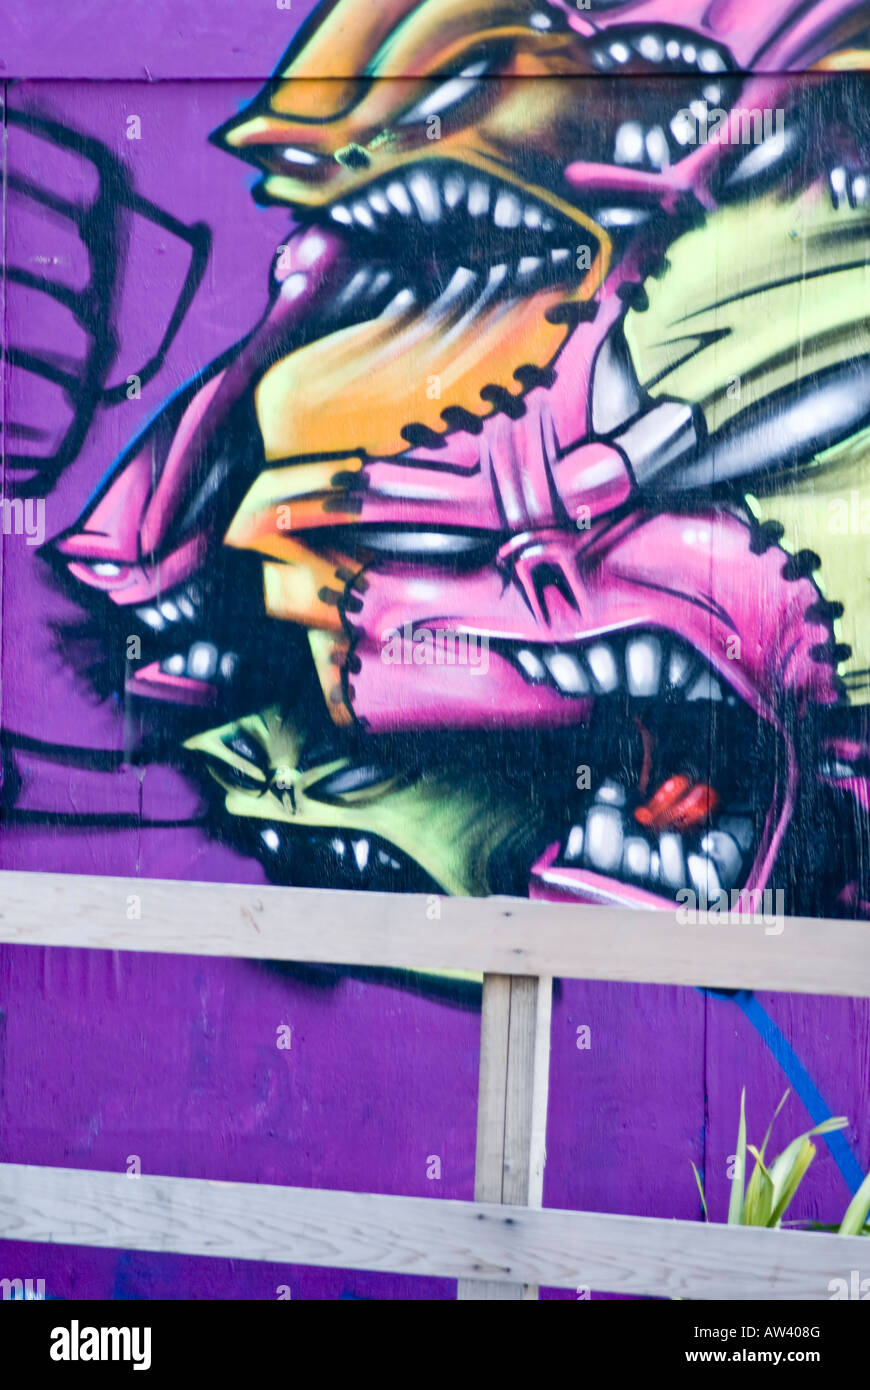 Exposición pública de arte urbano Graffiti Foto de stock